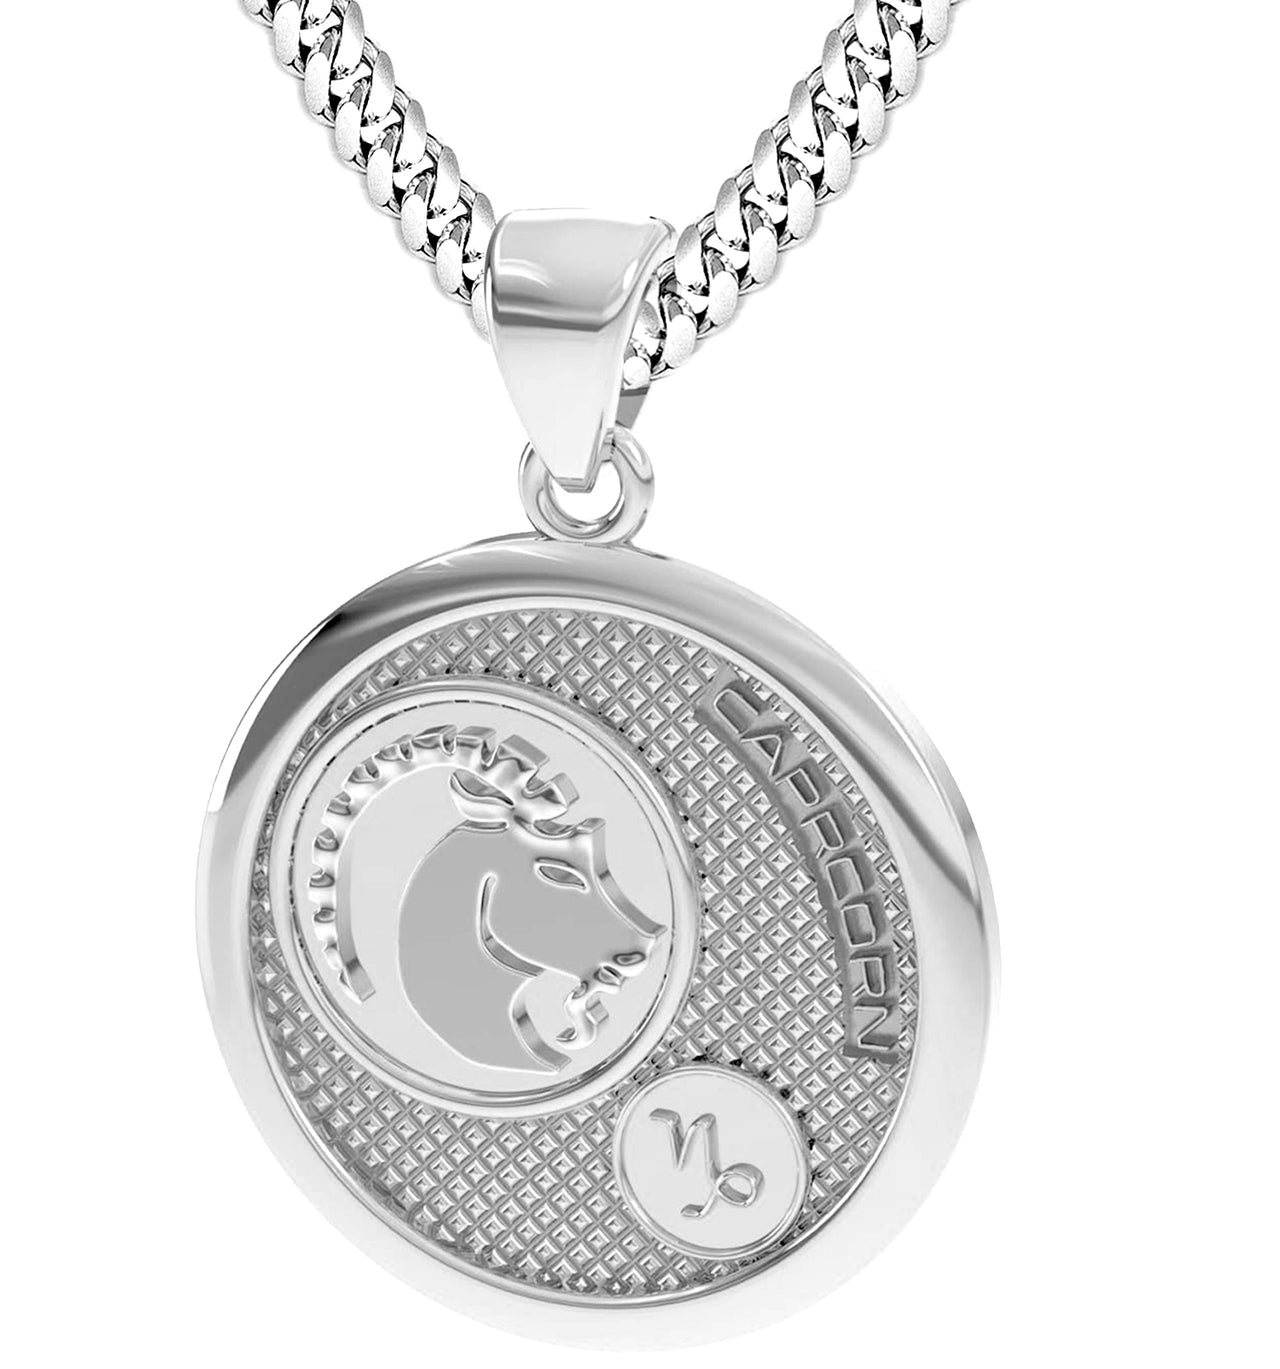 Men's 925 Sterling Silver Round Capricorn Zodiac Polished Finish Pendant Necklace, 33mm